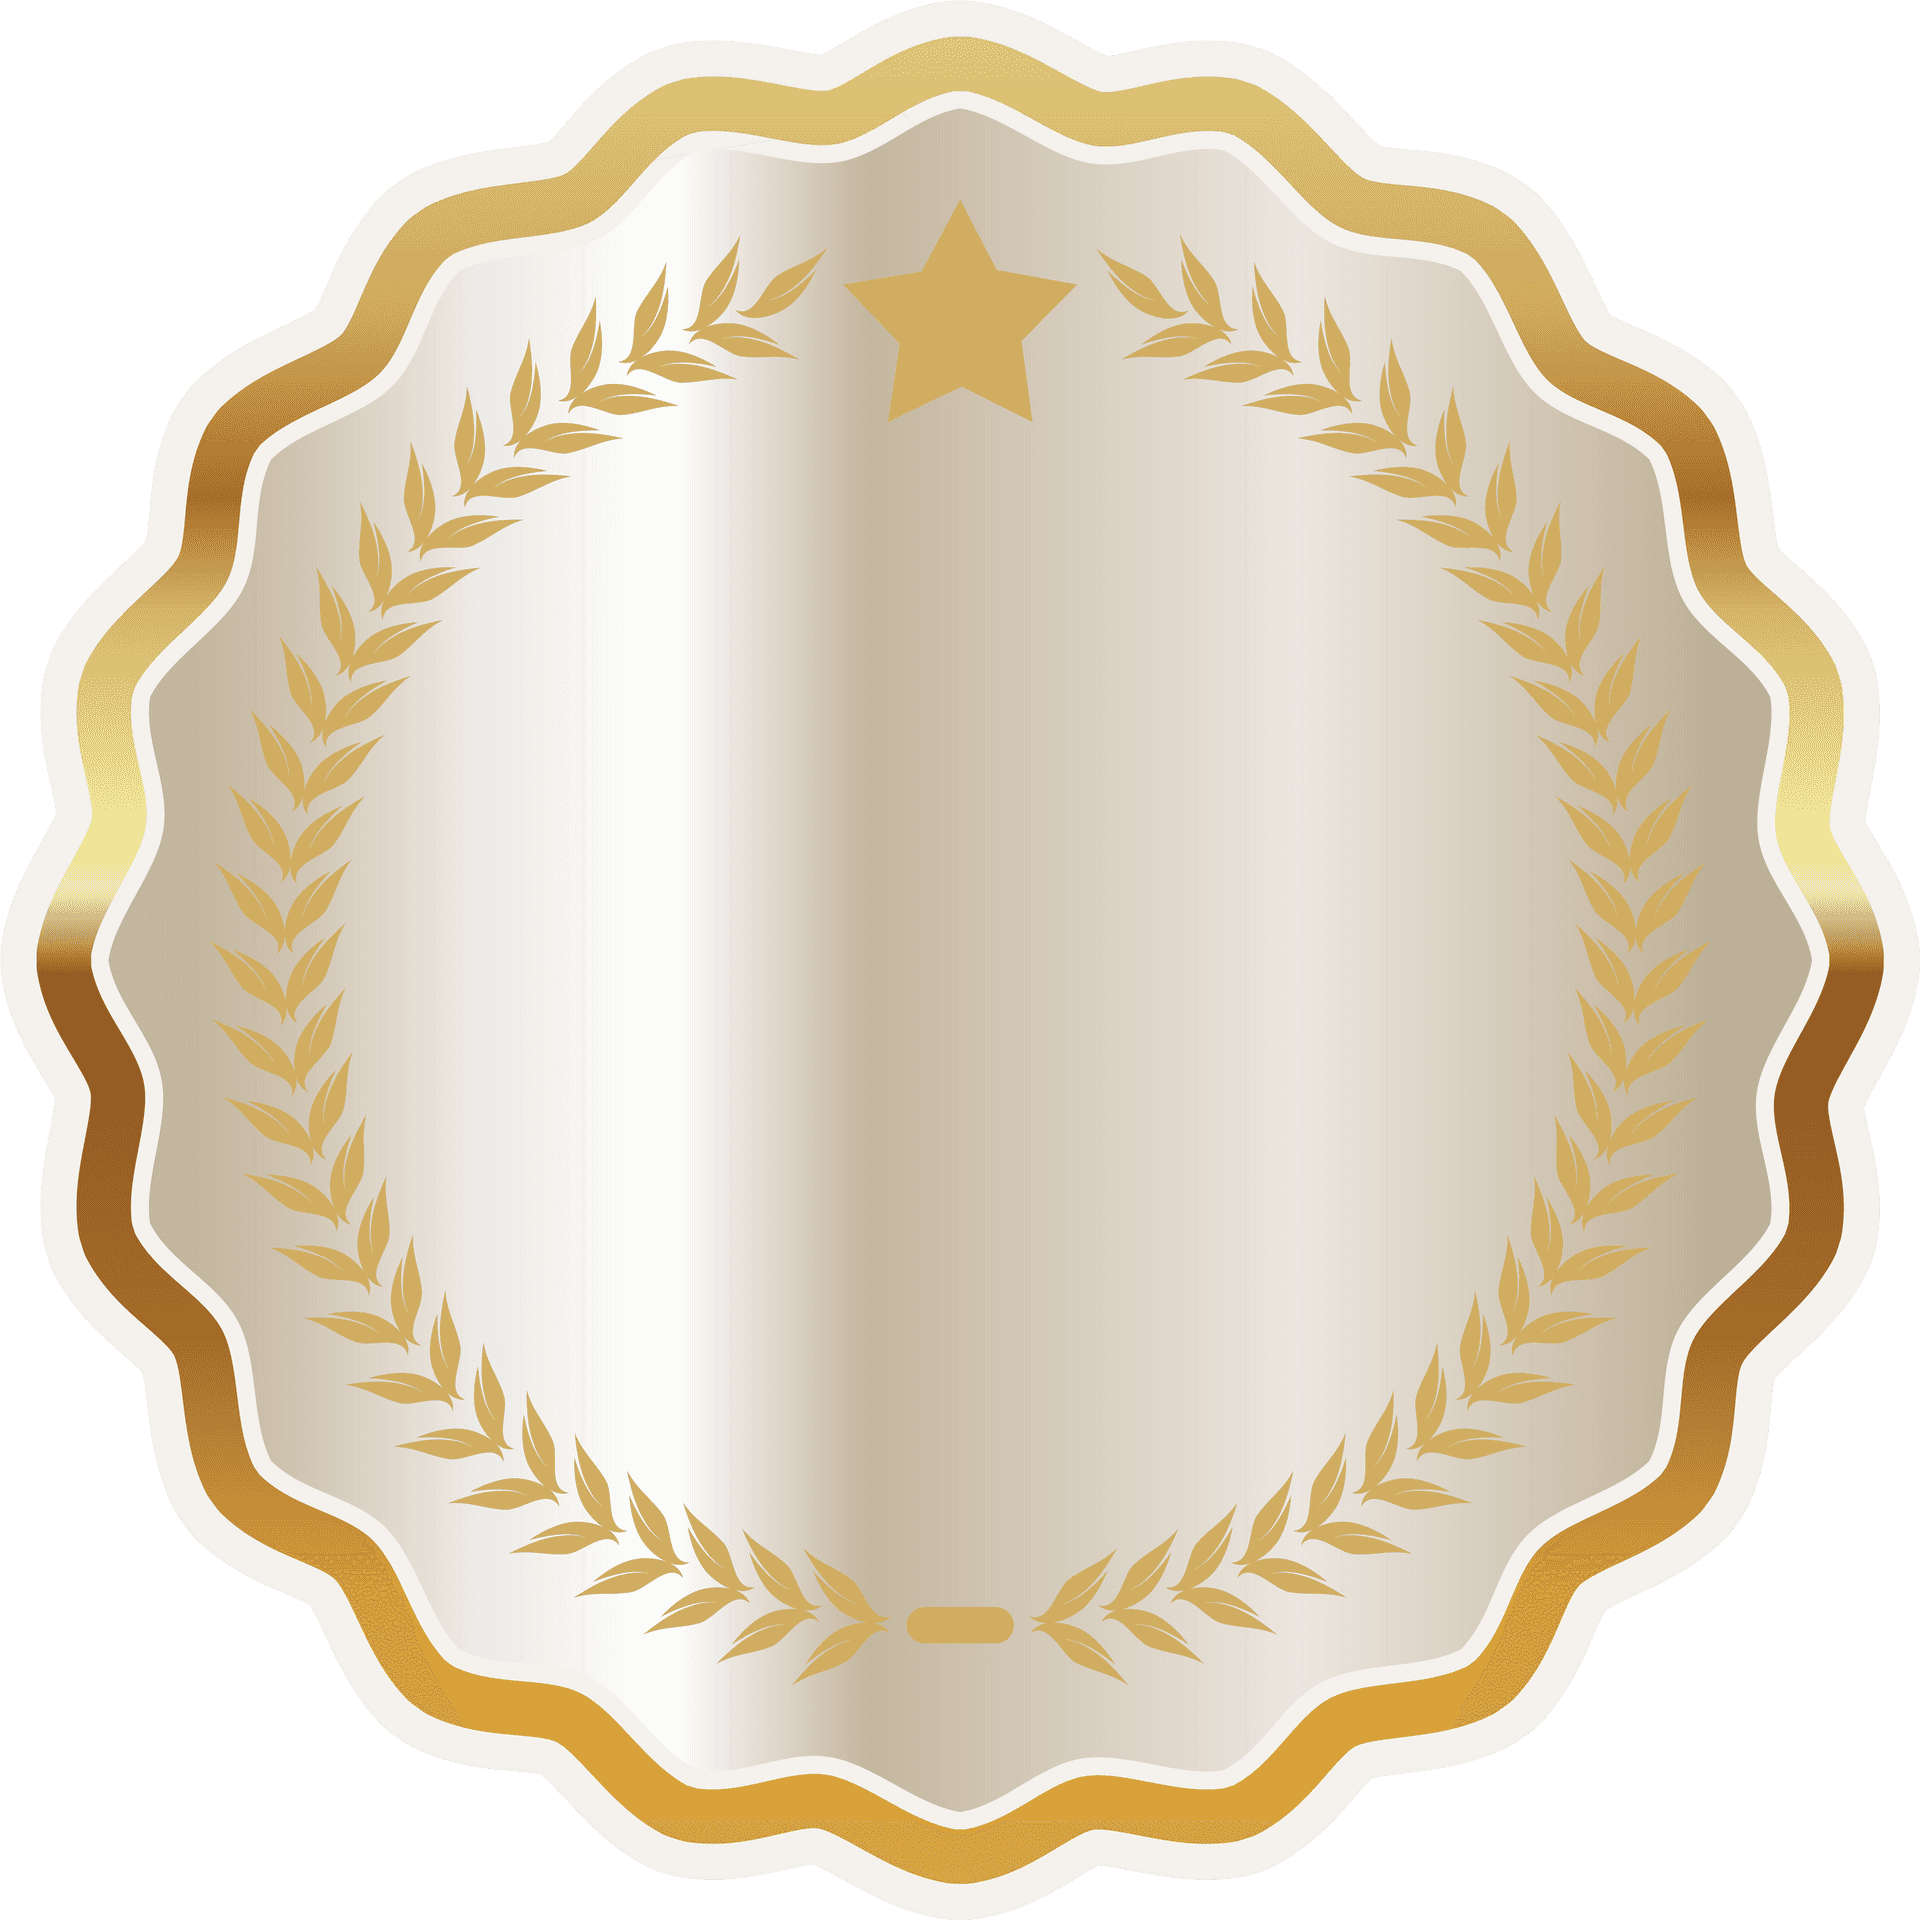 Elegant Gold Award Seal PNG image